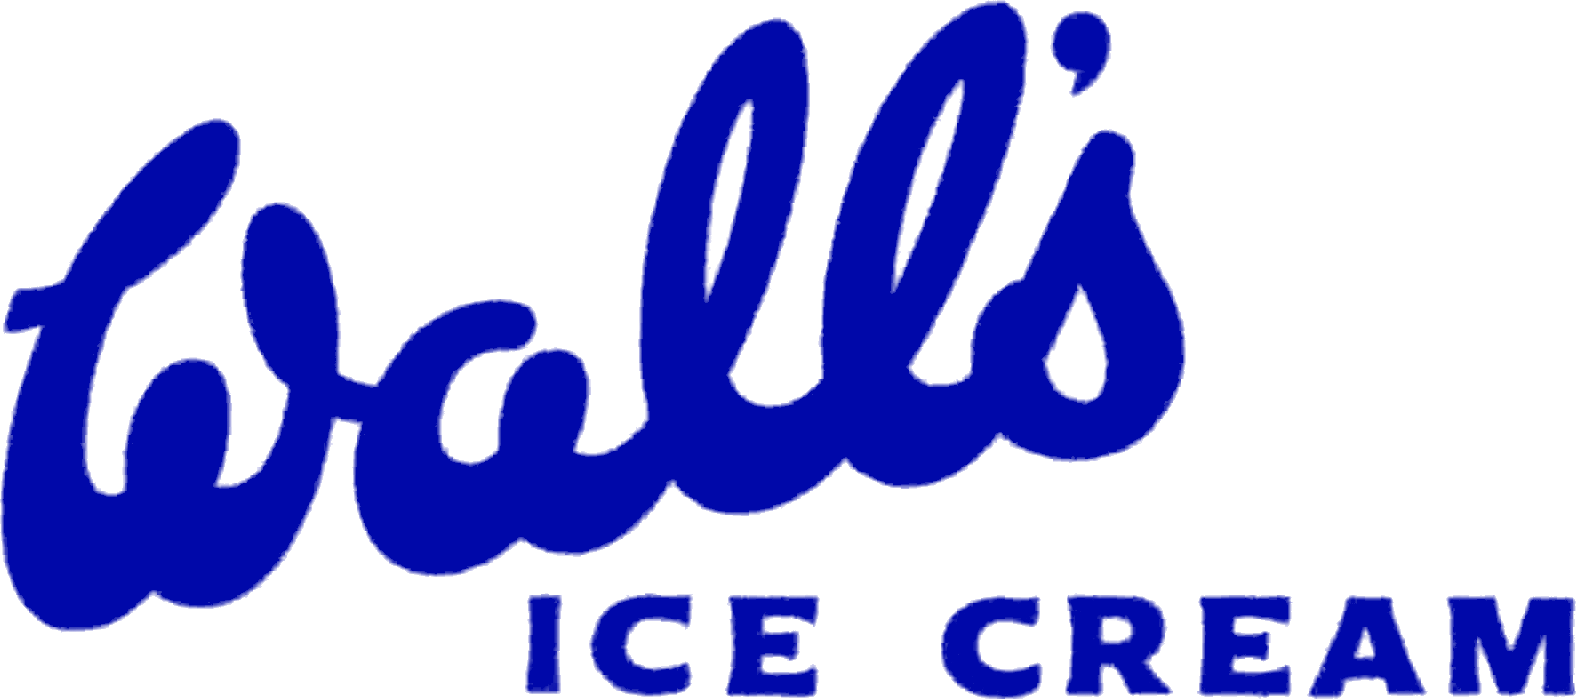 Walls Ice Cream Logo - old logo for Walls Ice Cream | Logo 商標 | Walls ice cream, Old logo ...